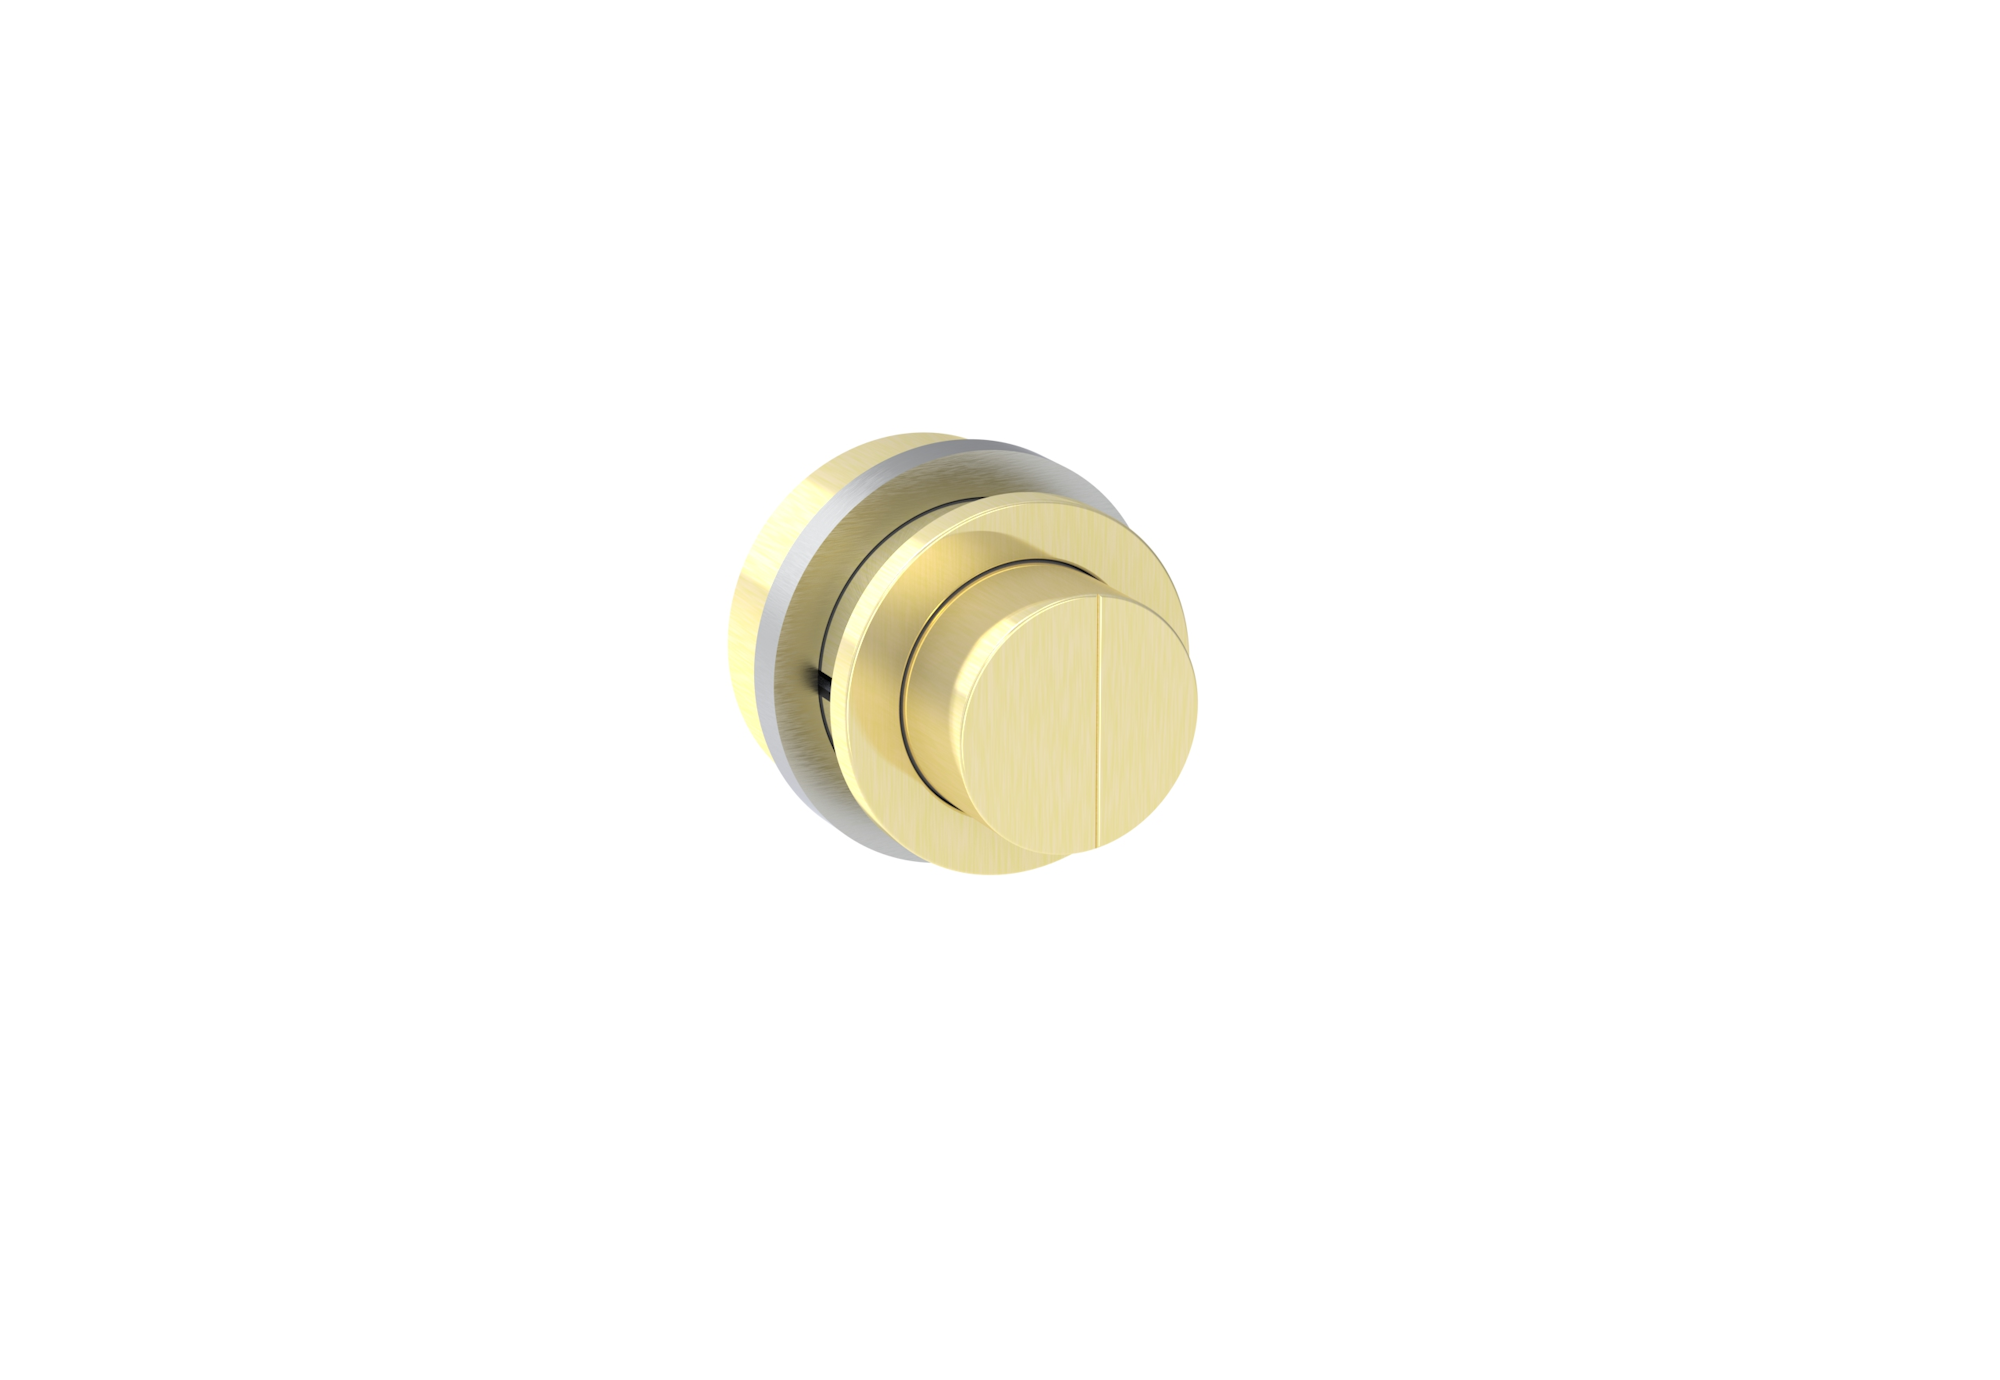 FLUSHE 2.0 brass flush button (for HC2030) - Brushed Brass PVD